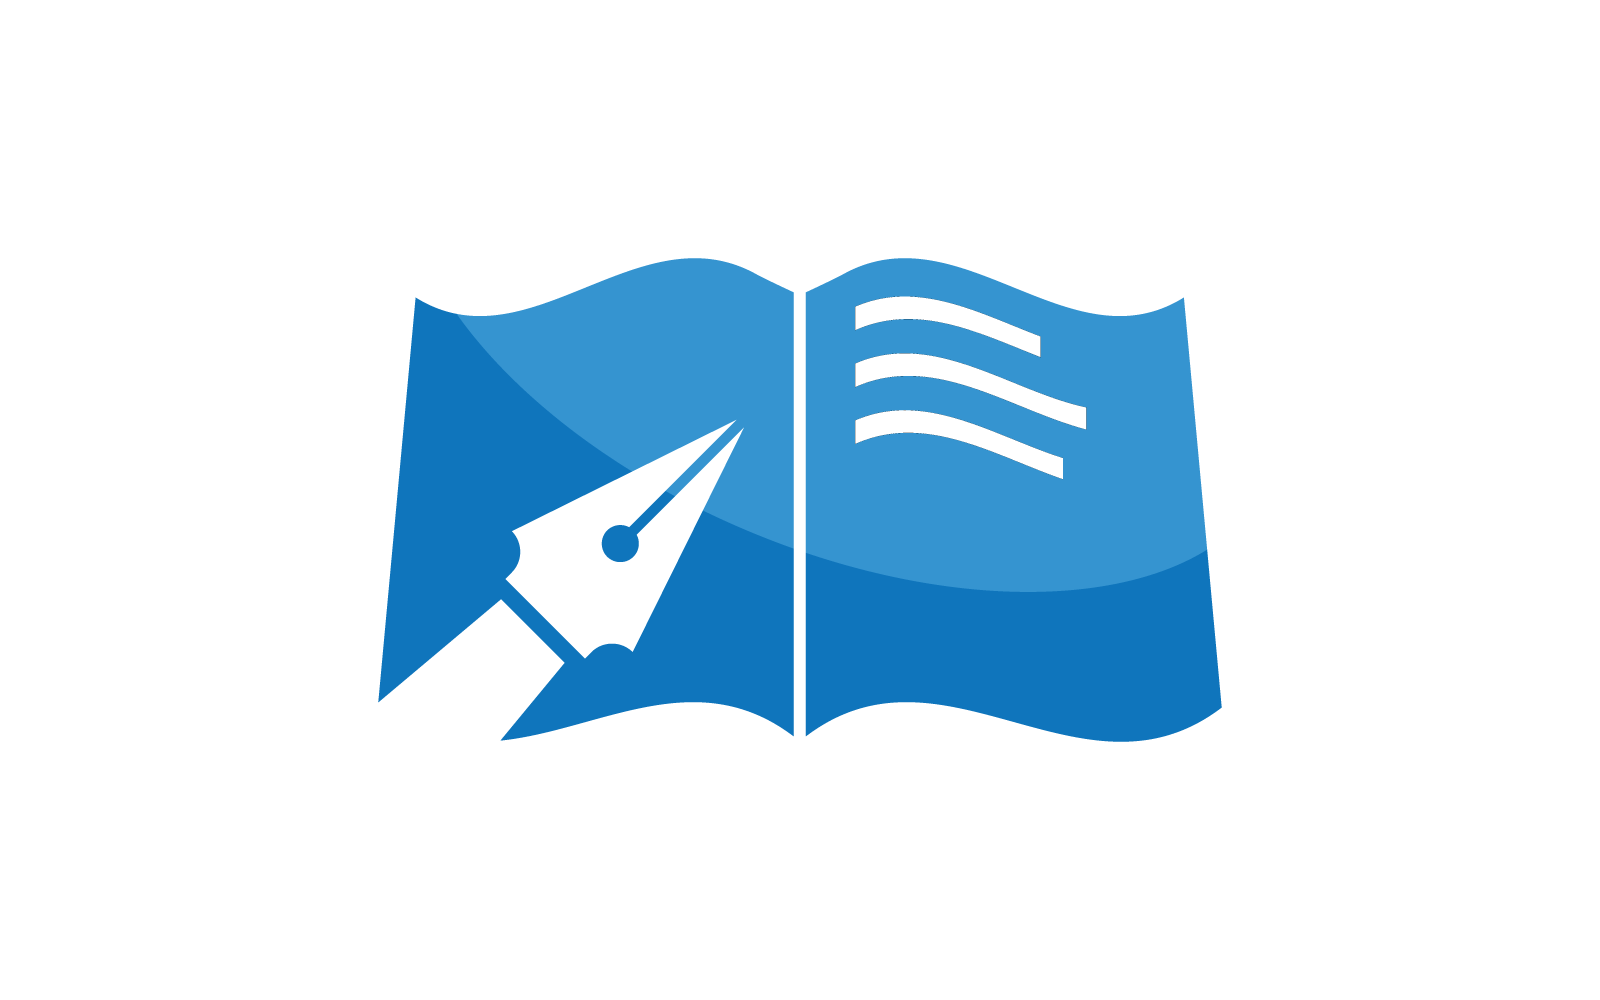 Pen and book logo illustration vector flat design